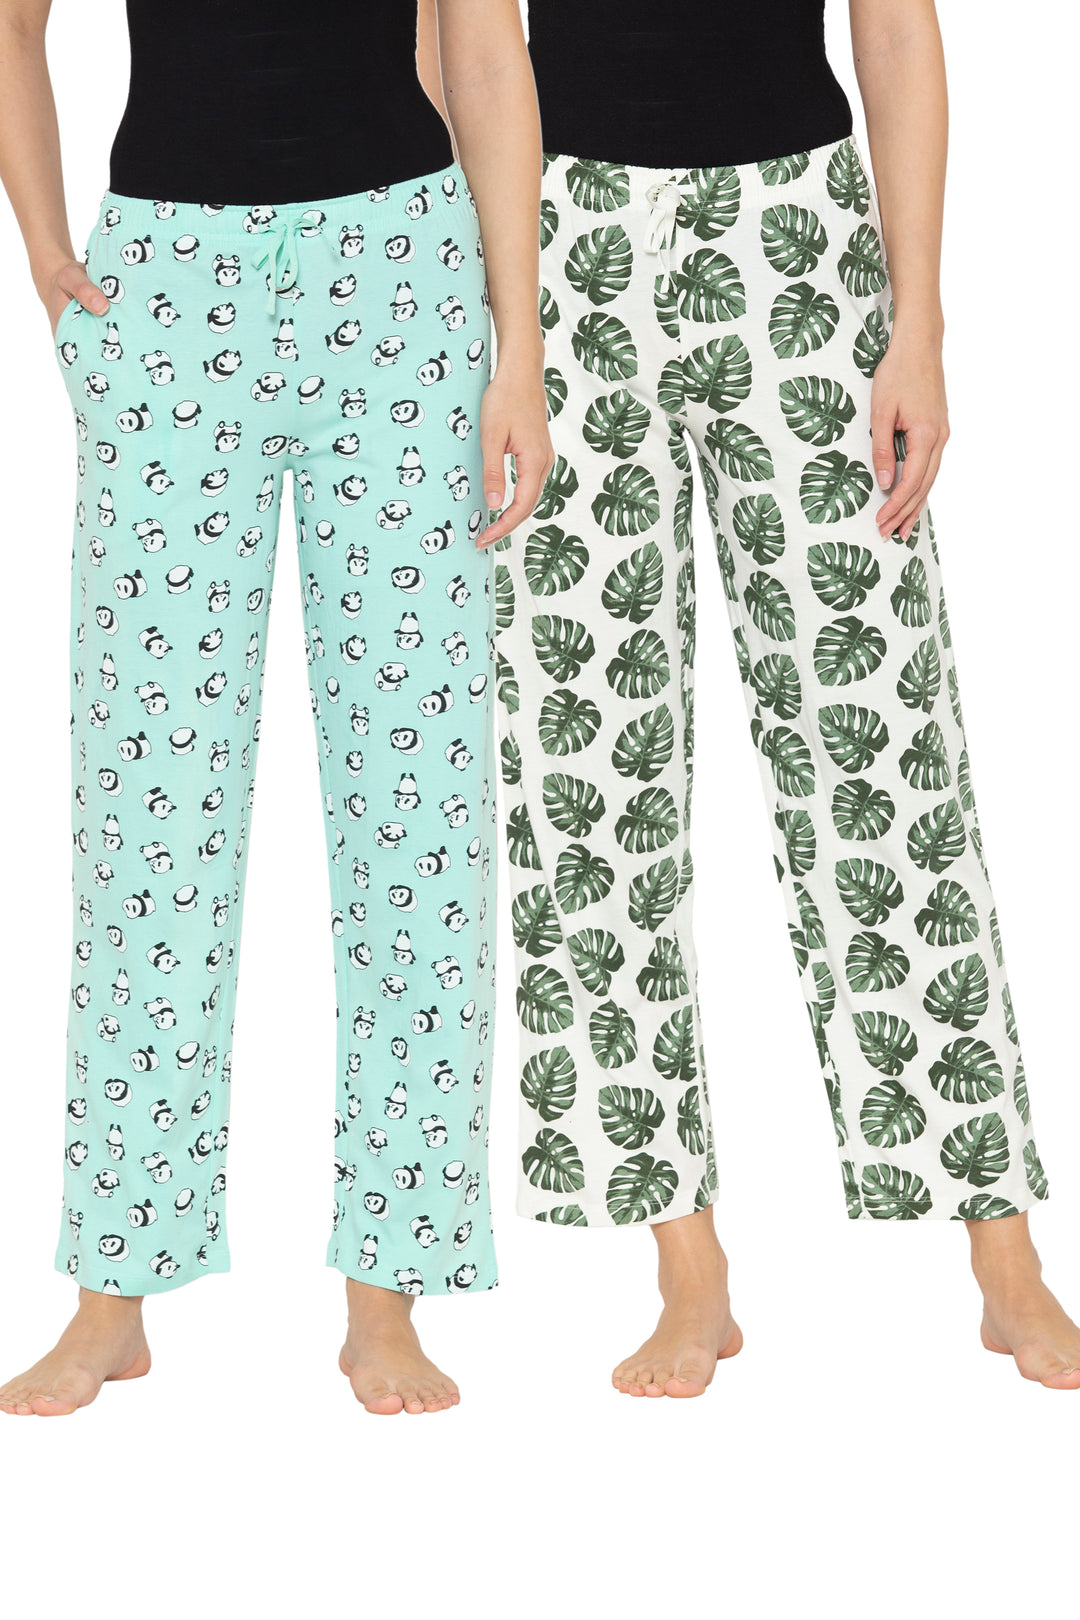 JUNZAN Aegean Teal Turtle Linen Nautical Women's Pajama Pants Long Pajama  Bottoms Pants with Stretch Drawing, Aegean Teal Turtle Linen Nautical, Large  : : Clothing, Shoes & Accessories